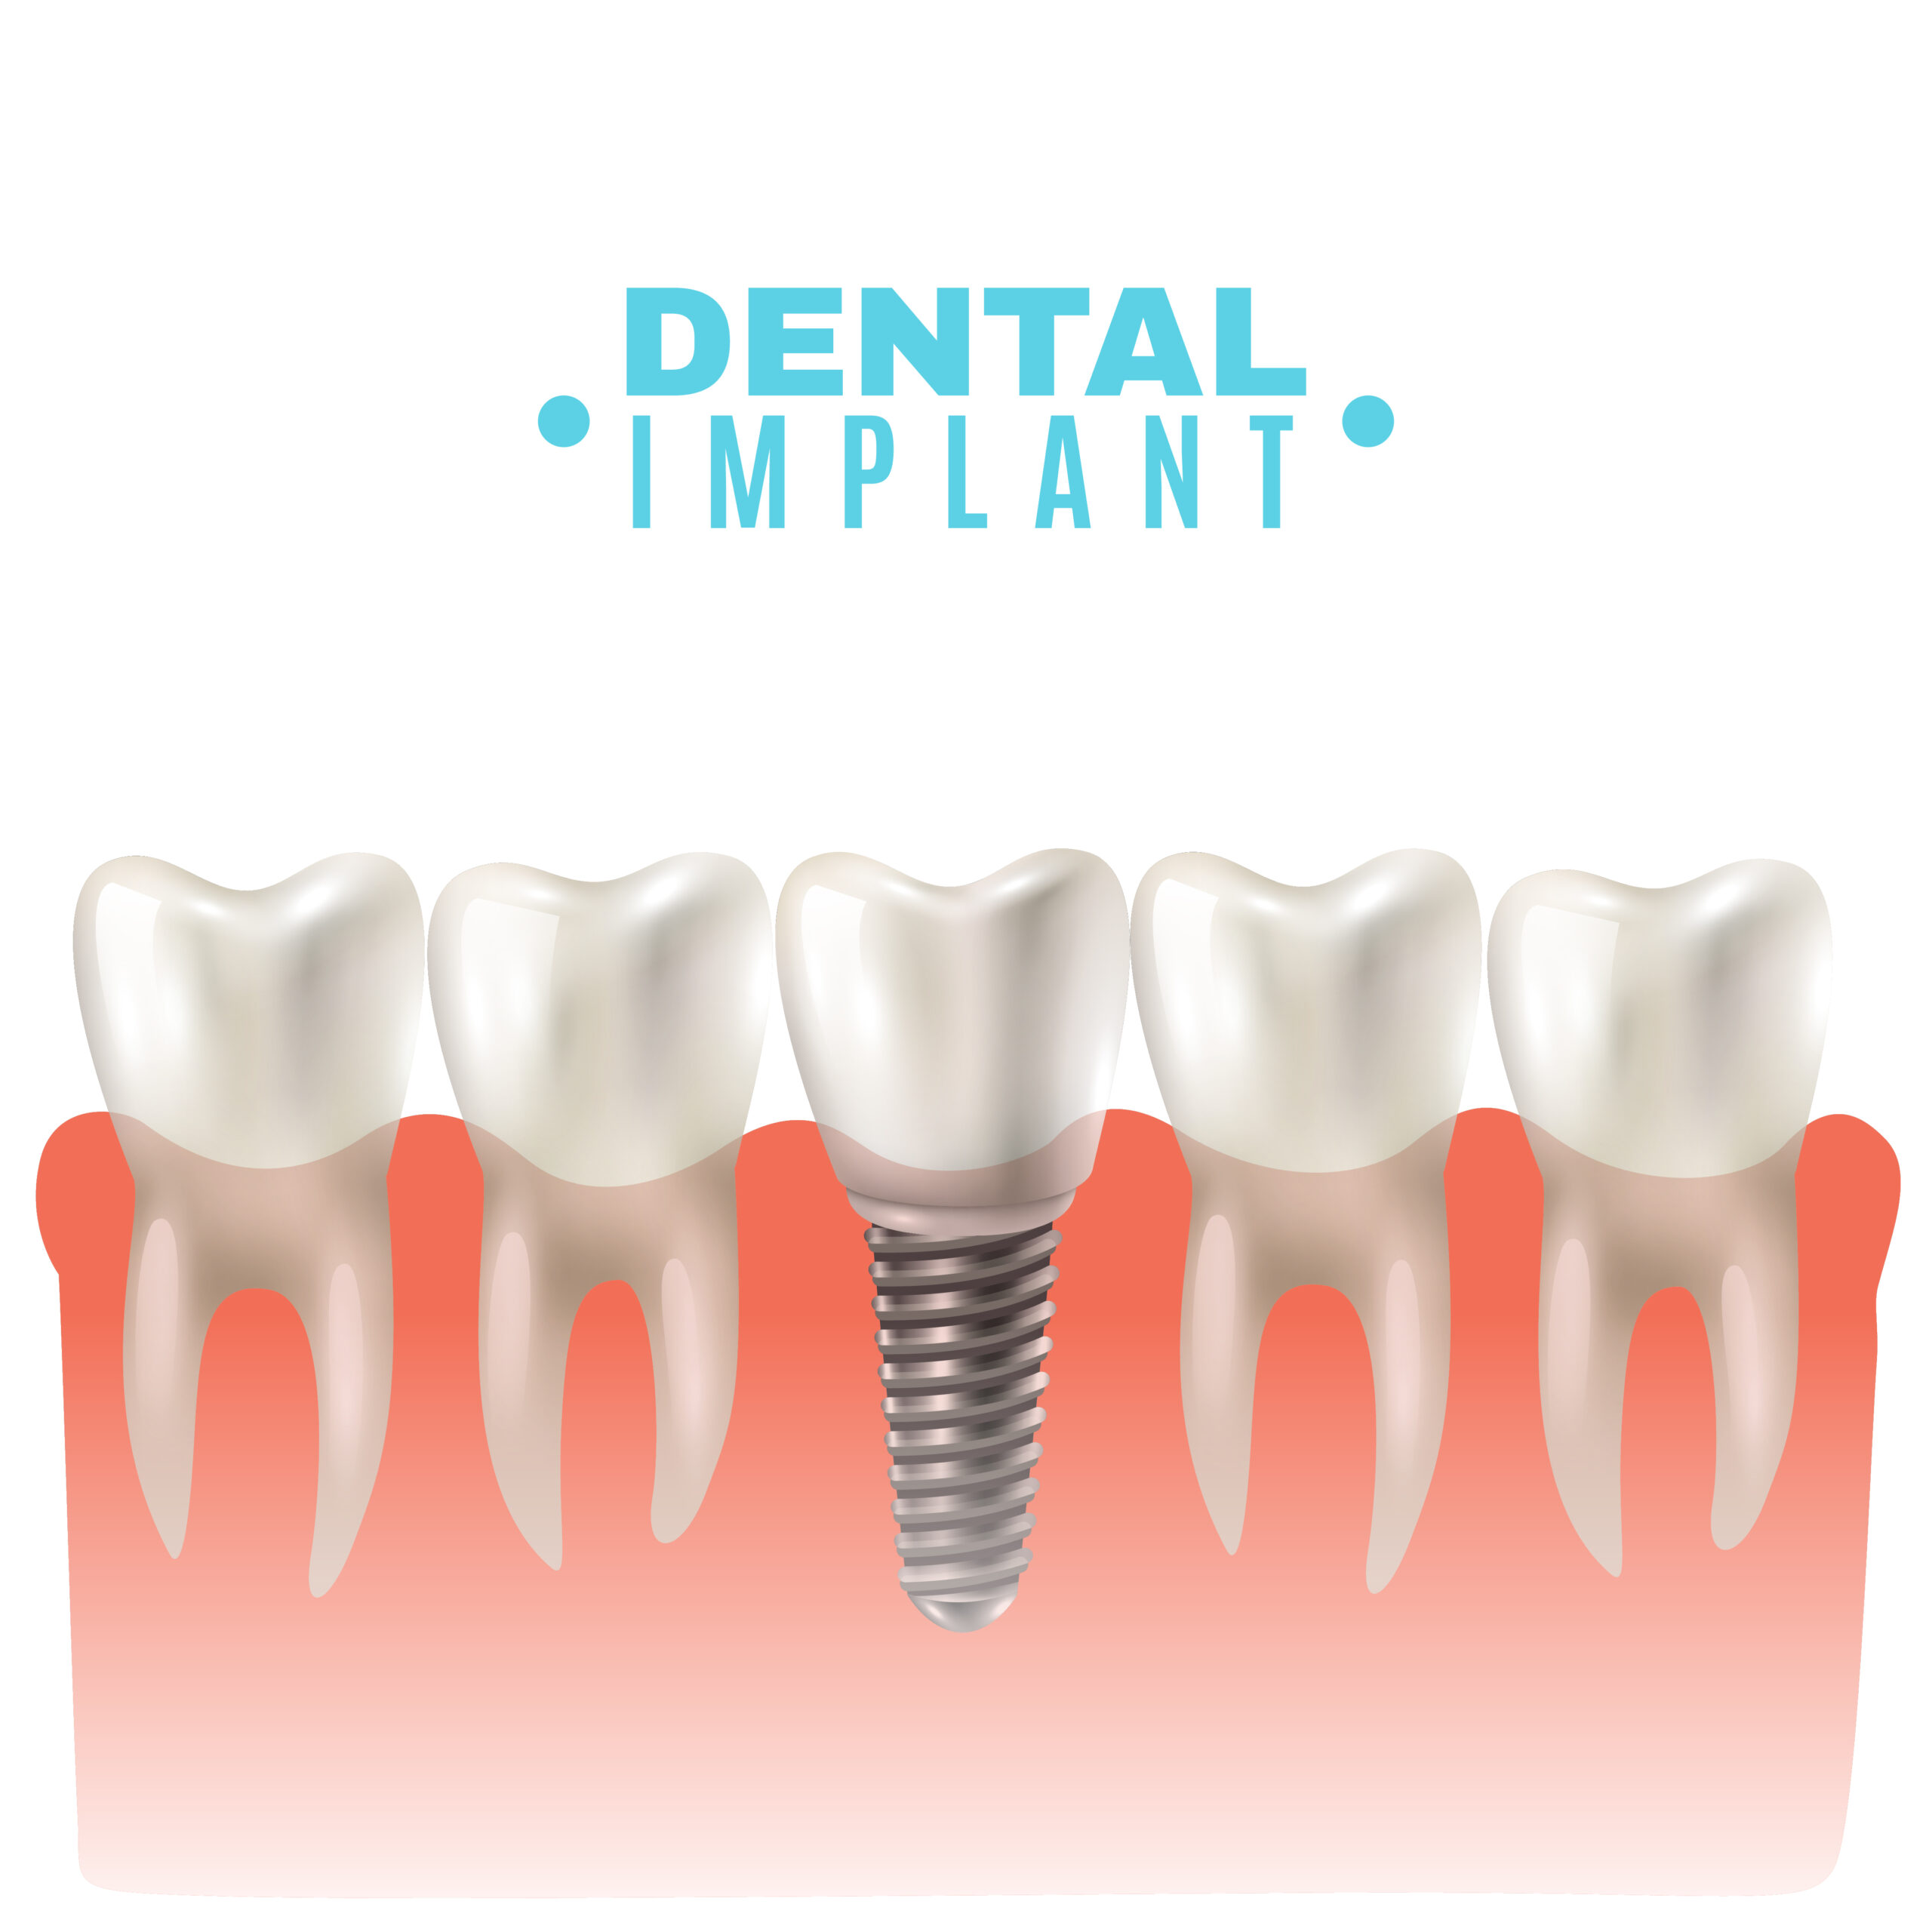 Dental implant model closeup cut away side view educative medical poster vector illustration